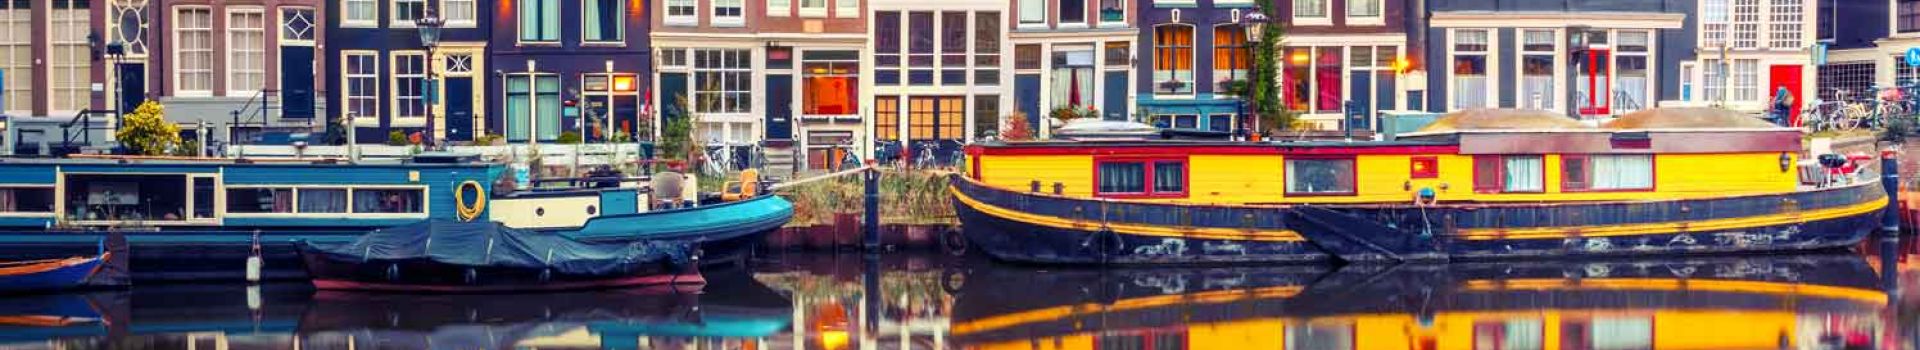 Holidays to Amsterdam | Book Flights & Hotel | Cassidy Travel